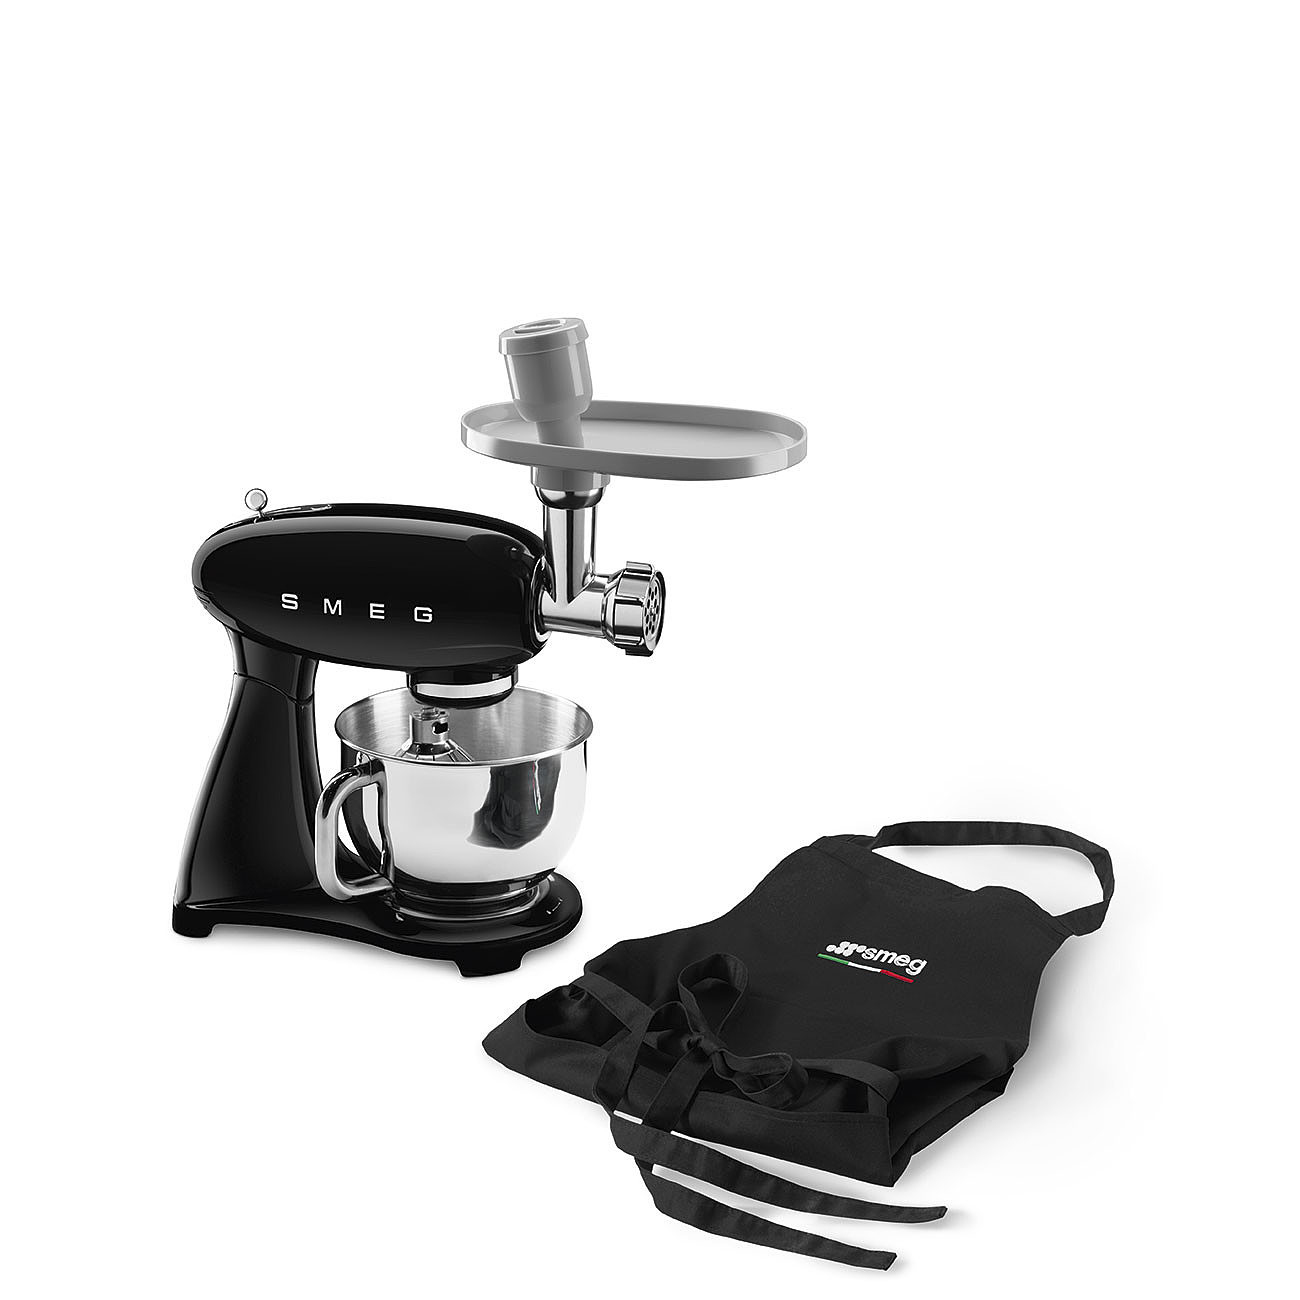 Smeg keukenrobot zwart bbq edition